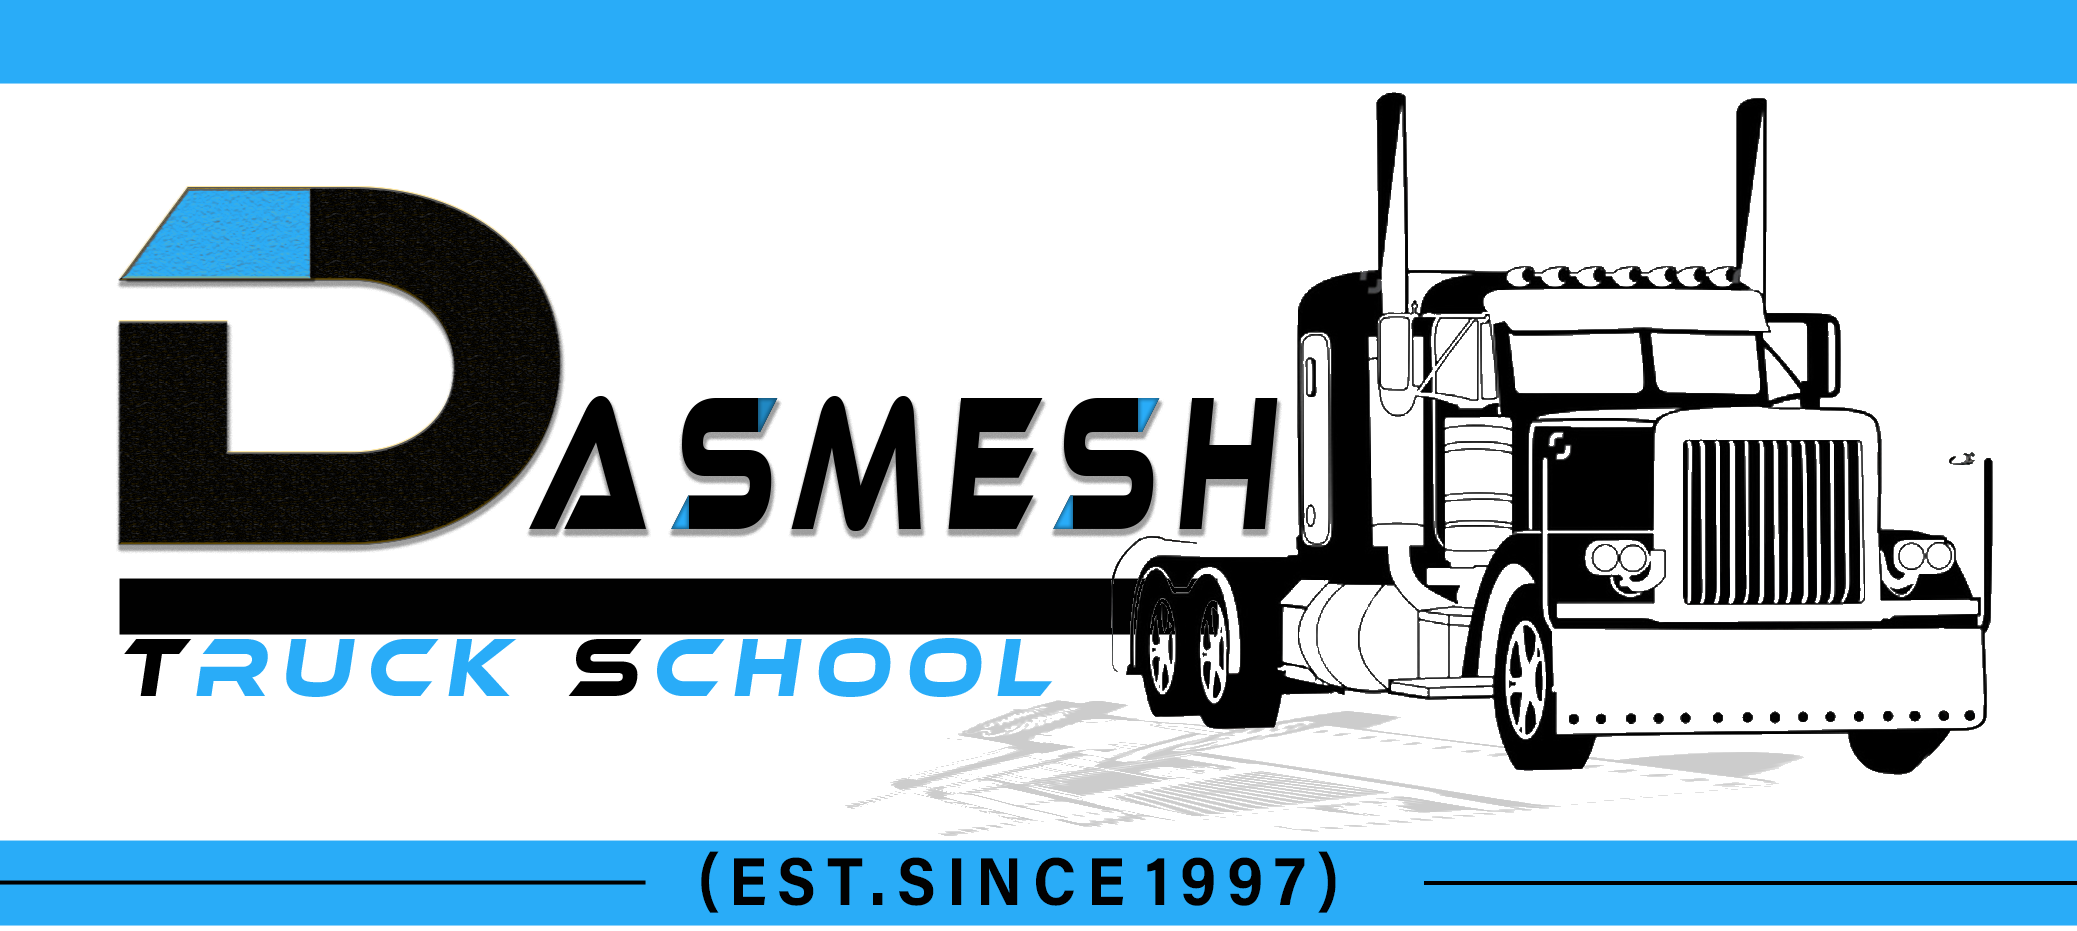 Logo of Dasmesh Truck School